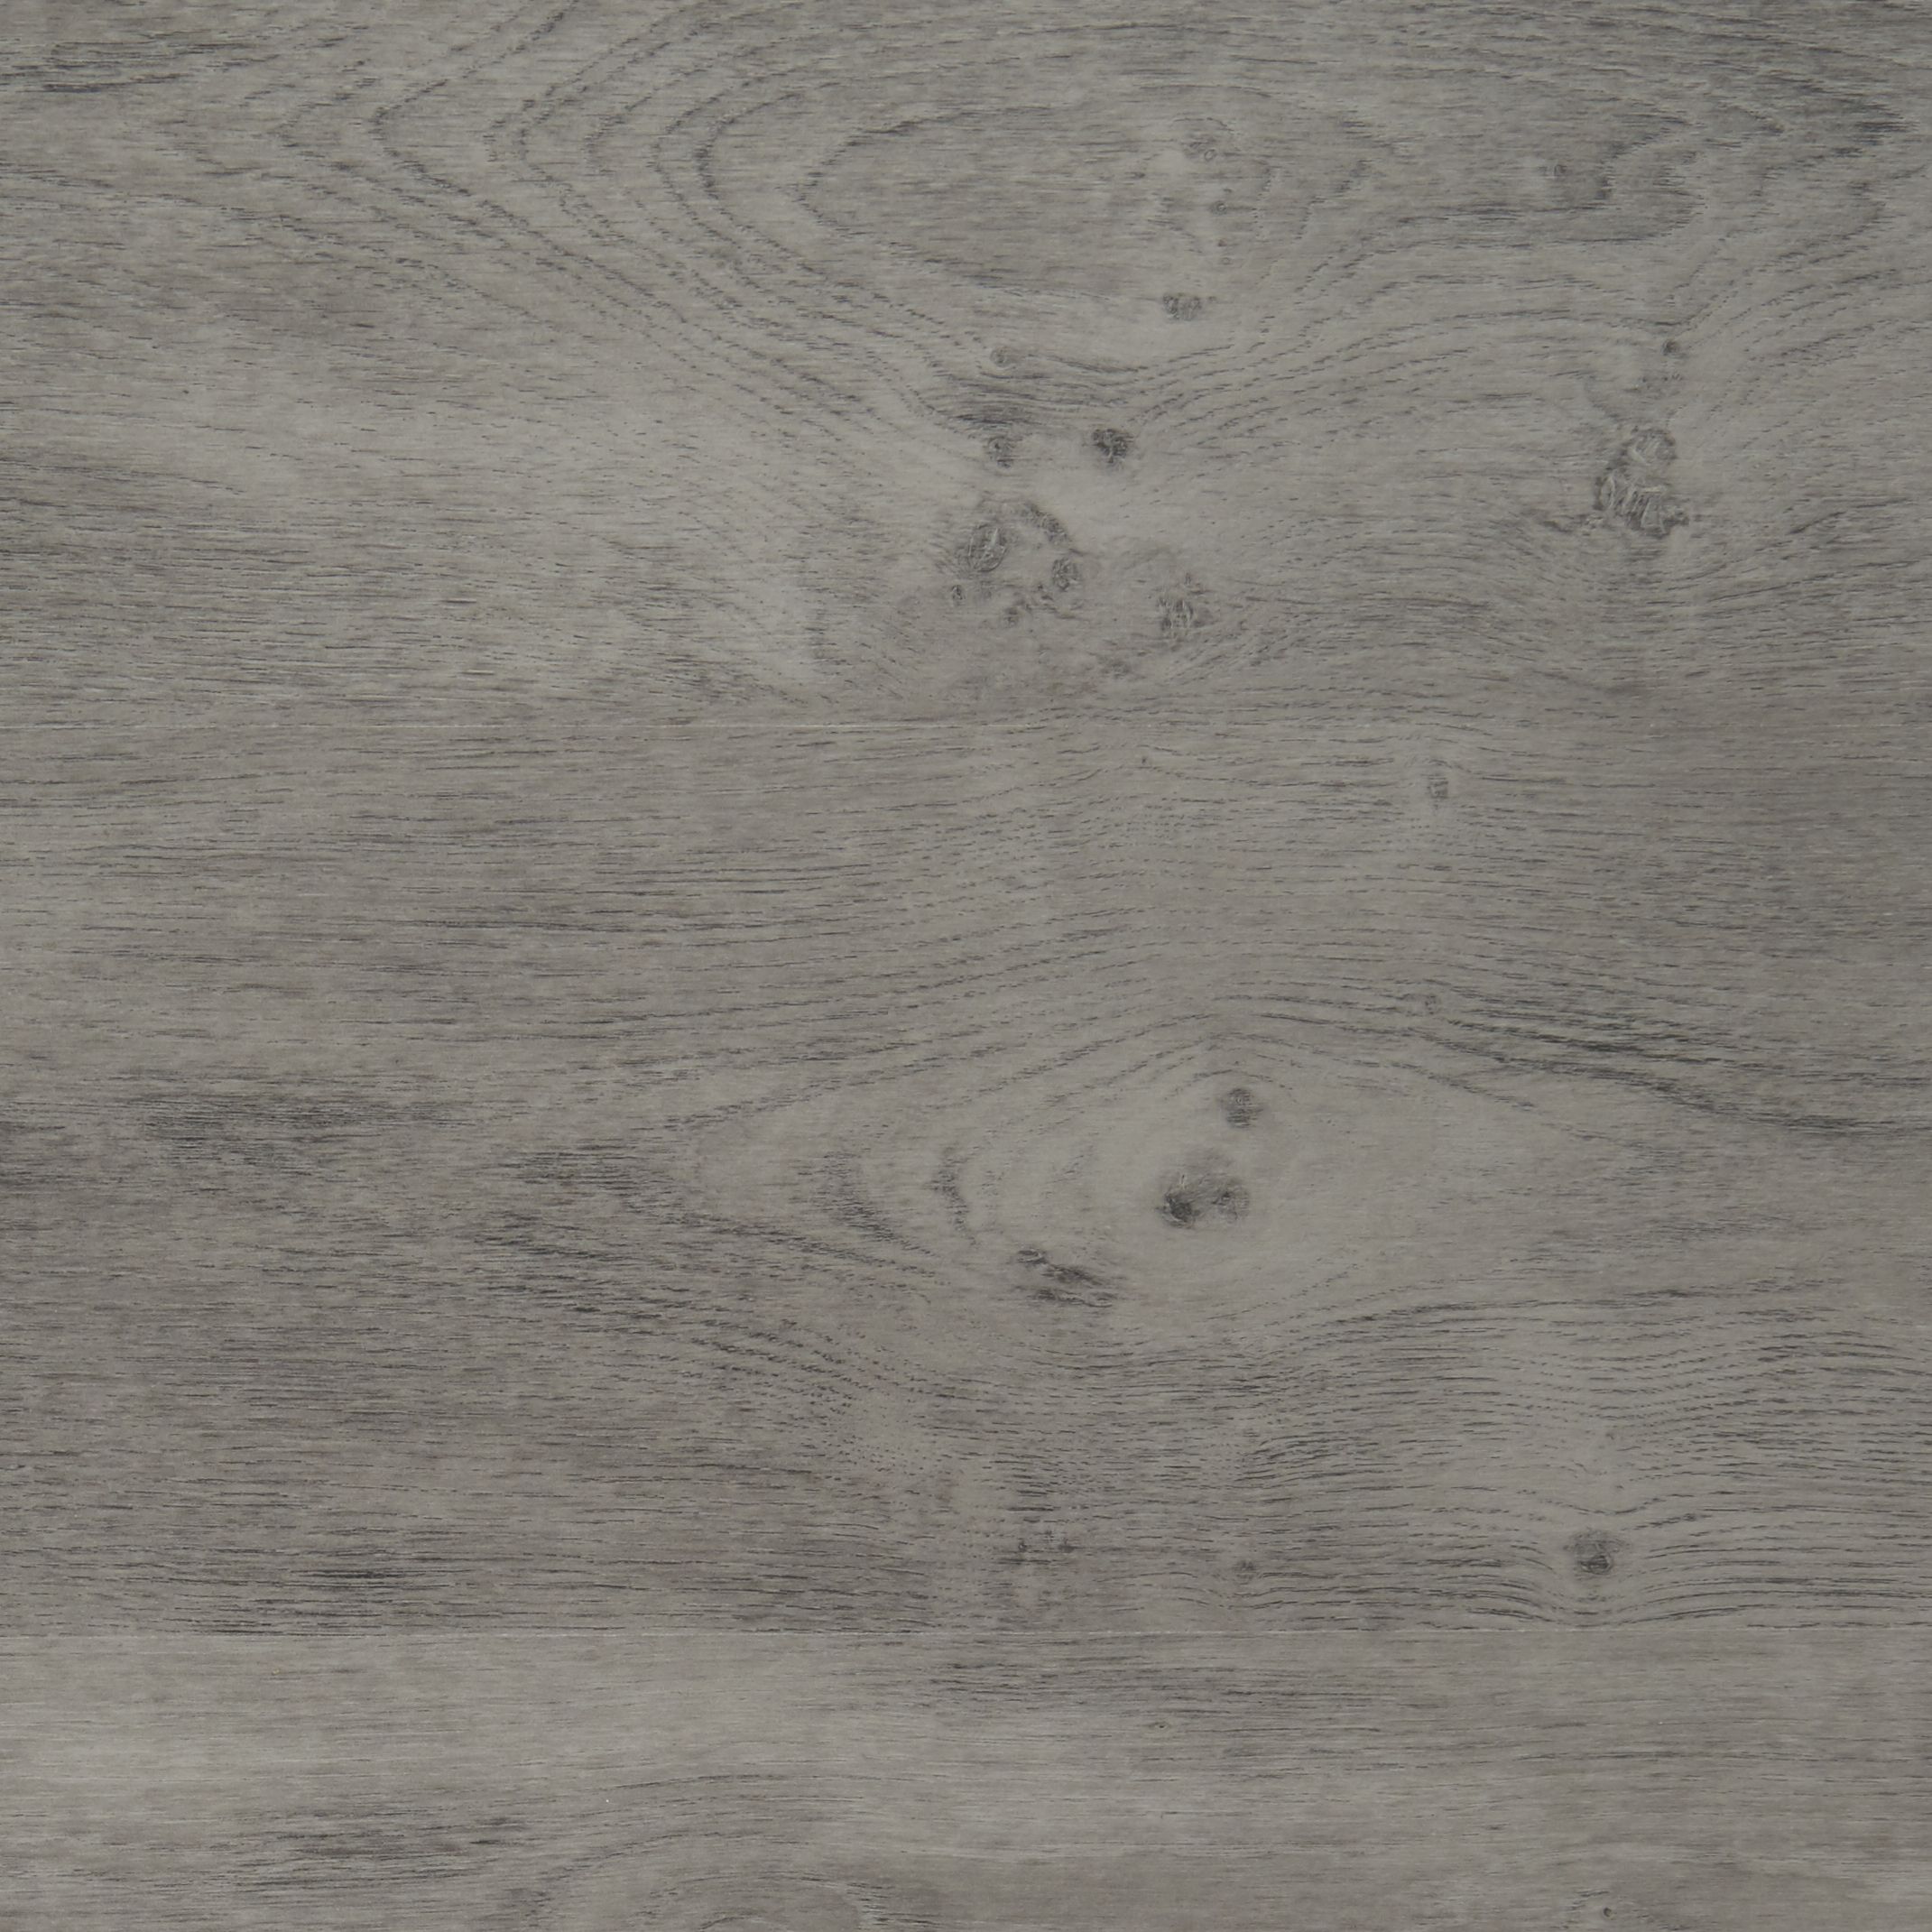 GoodHome Caloundra Vintage Oak Grey wood effect Laminate Flooring Sample